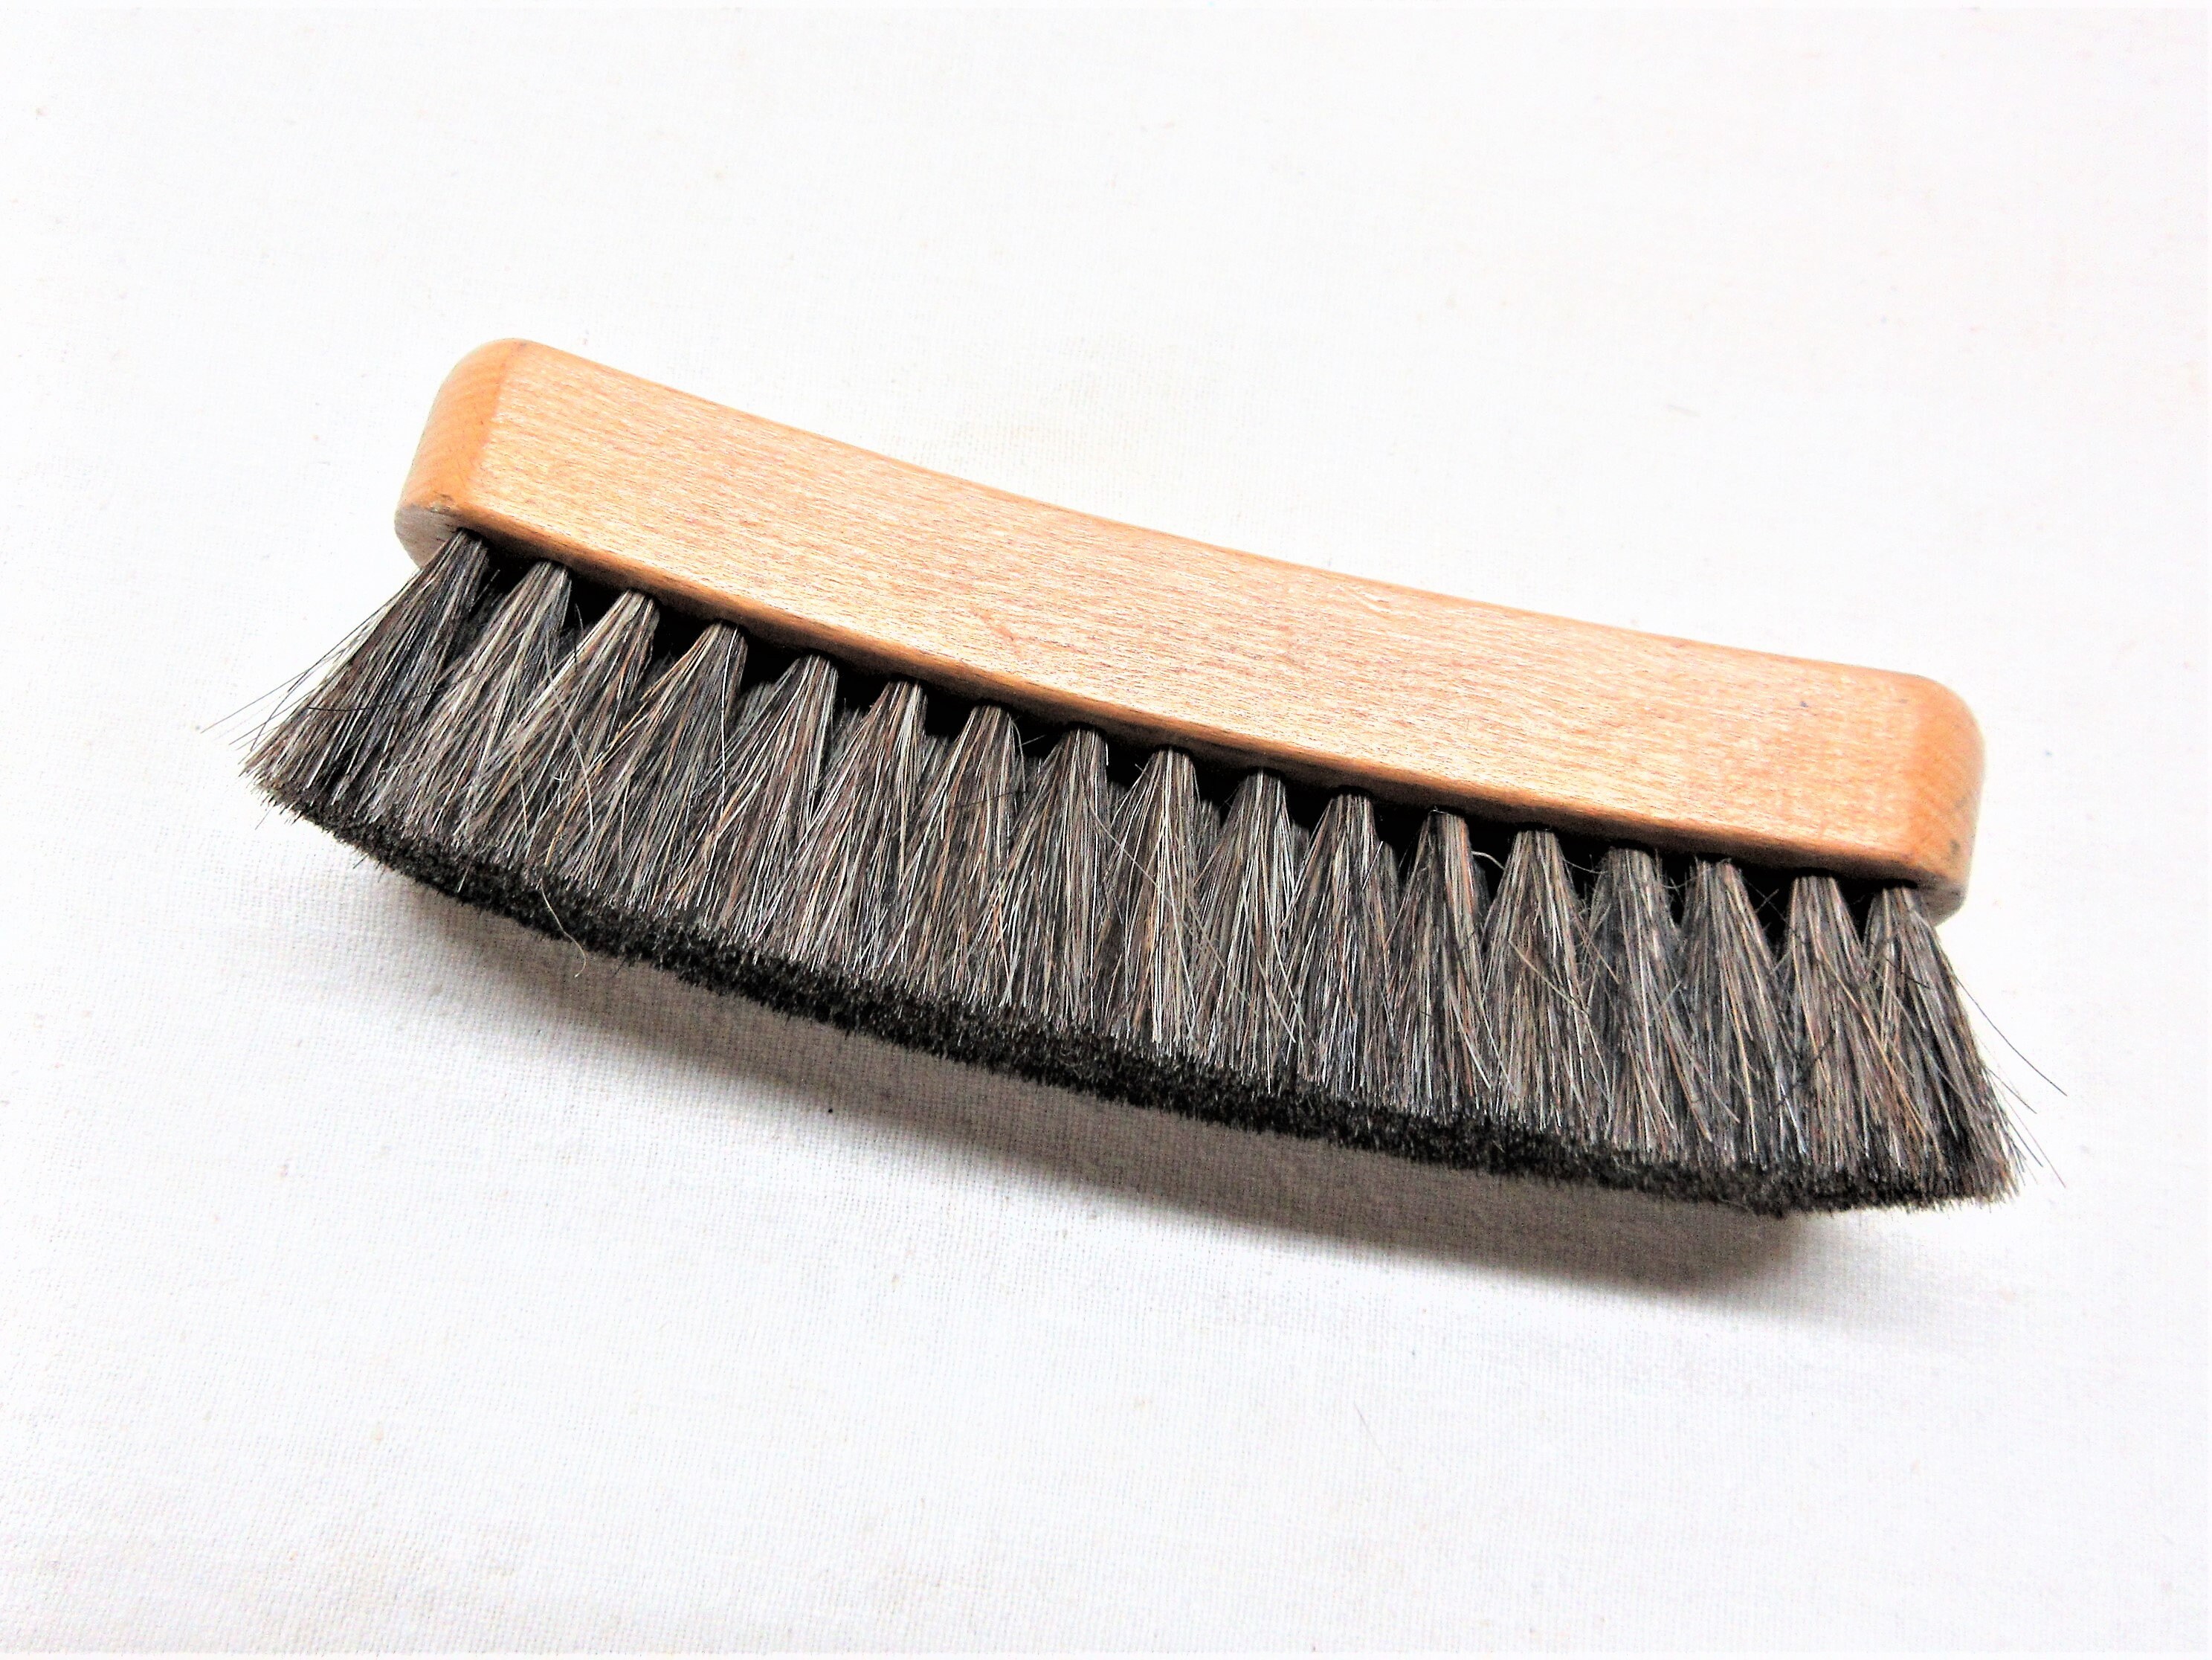 HEALLILY Shoe Shine Brush Wood Handle Soft Genuine Hair Bristle Polishing Brush Cleaning Brush for Shop Store Home 